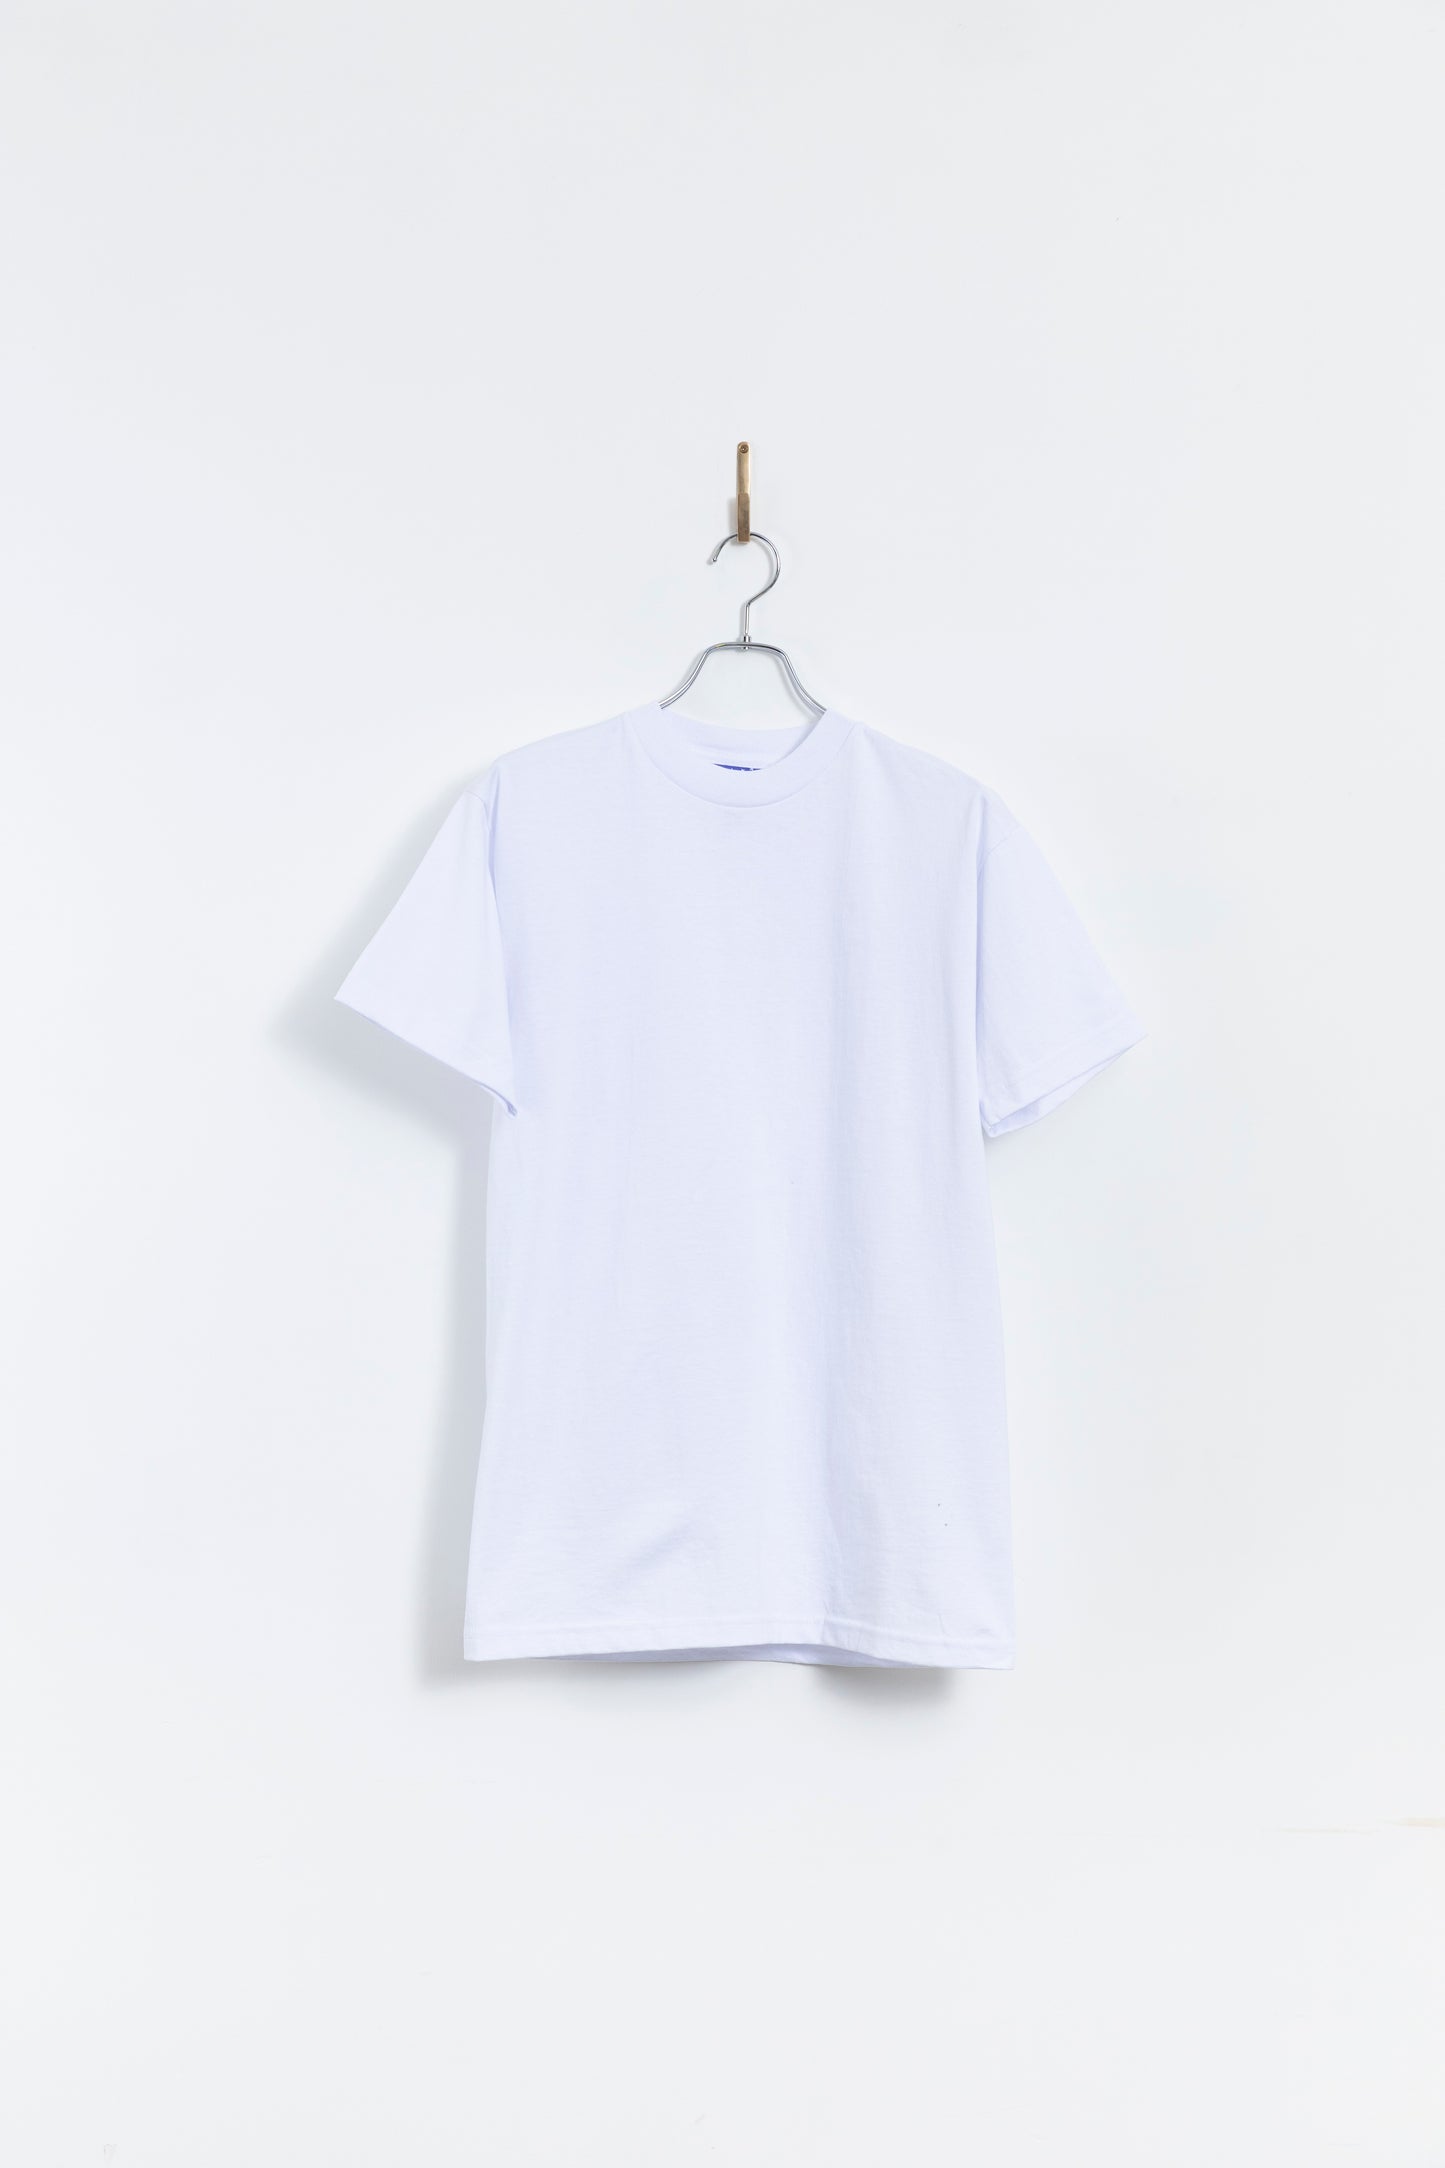 Bayside S/S Tee shirt (Union Made)